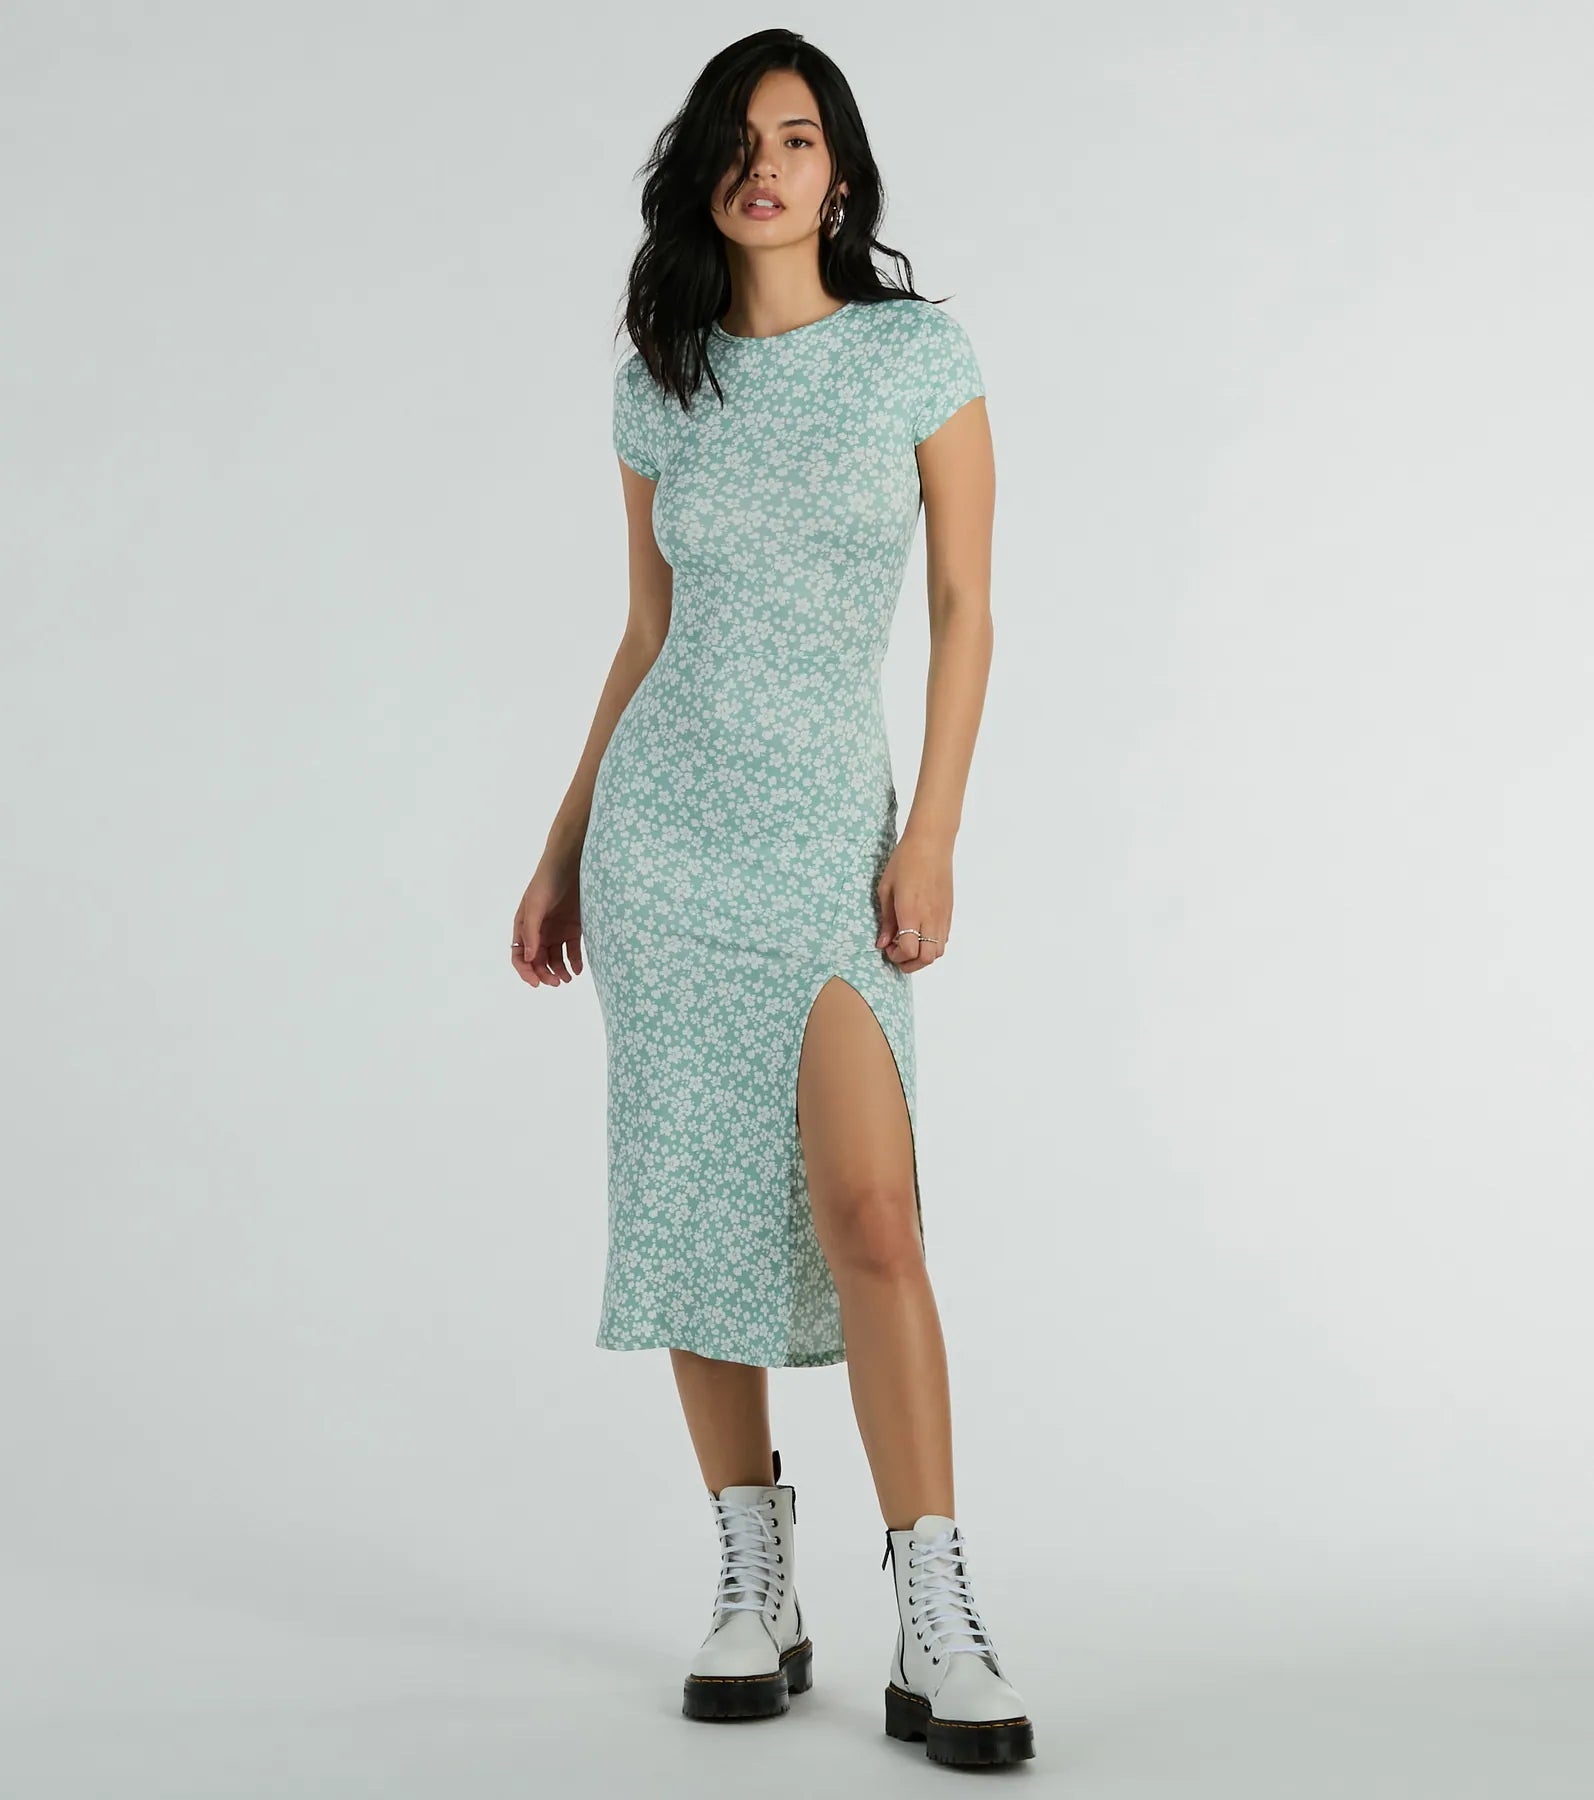 Floral Print Short Sleeves Sleeves Stretchy Cutout Slit Knit Spring Crew Neck Bodycon Dress/Midi Dress